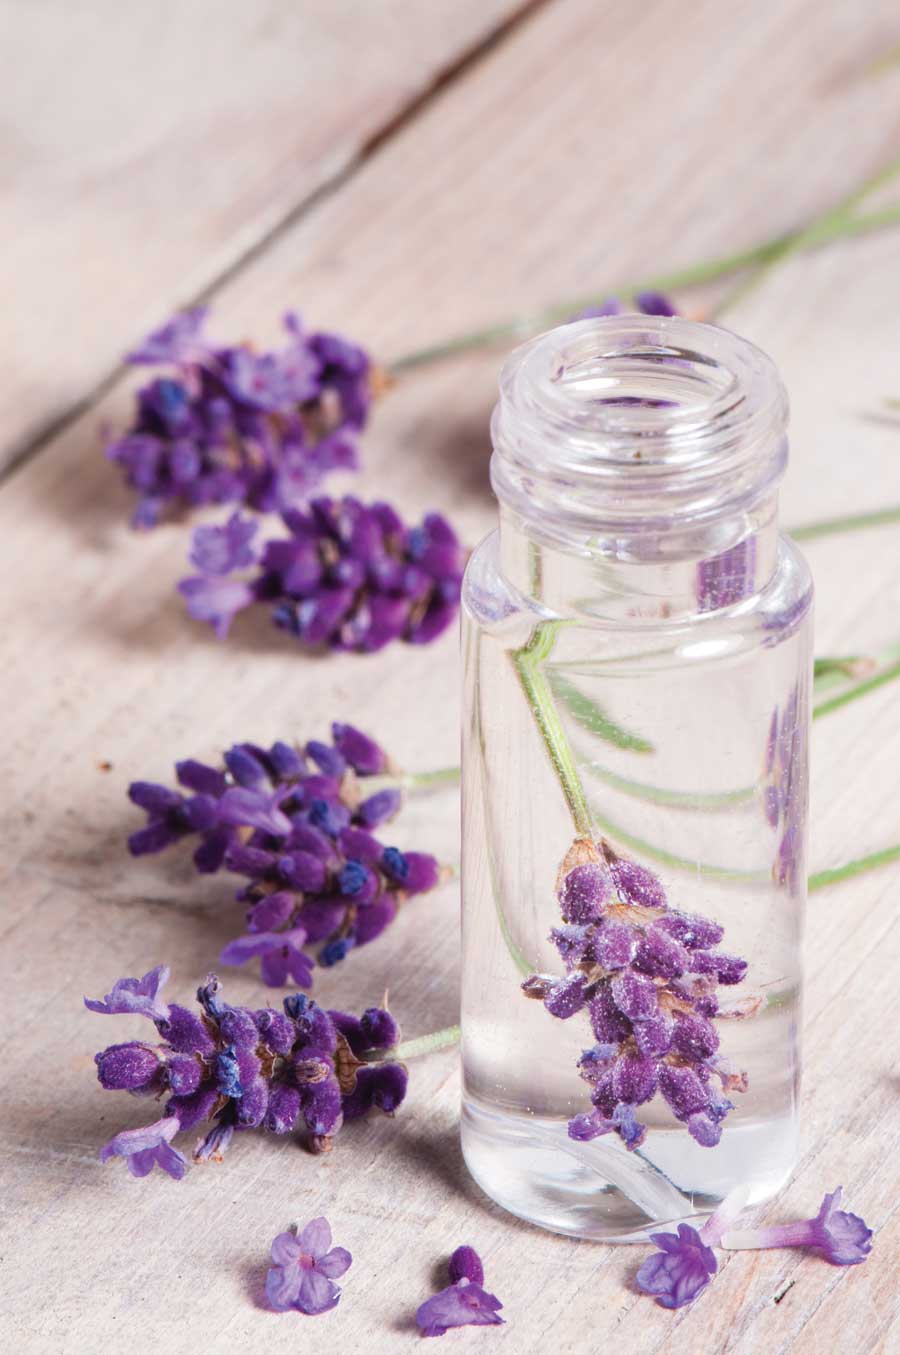 Lavender solid perfume